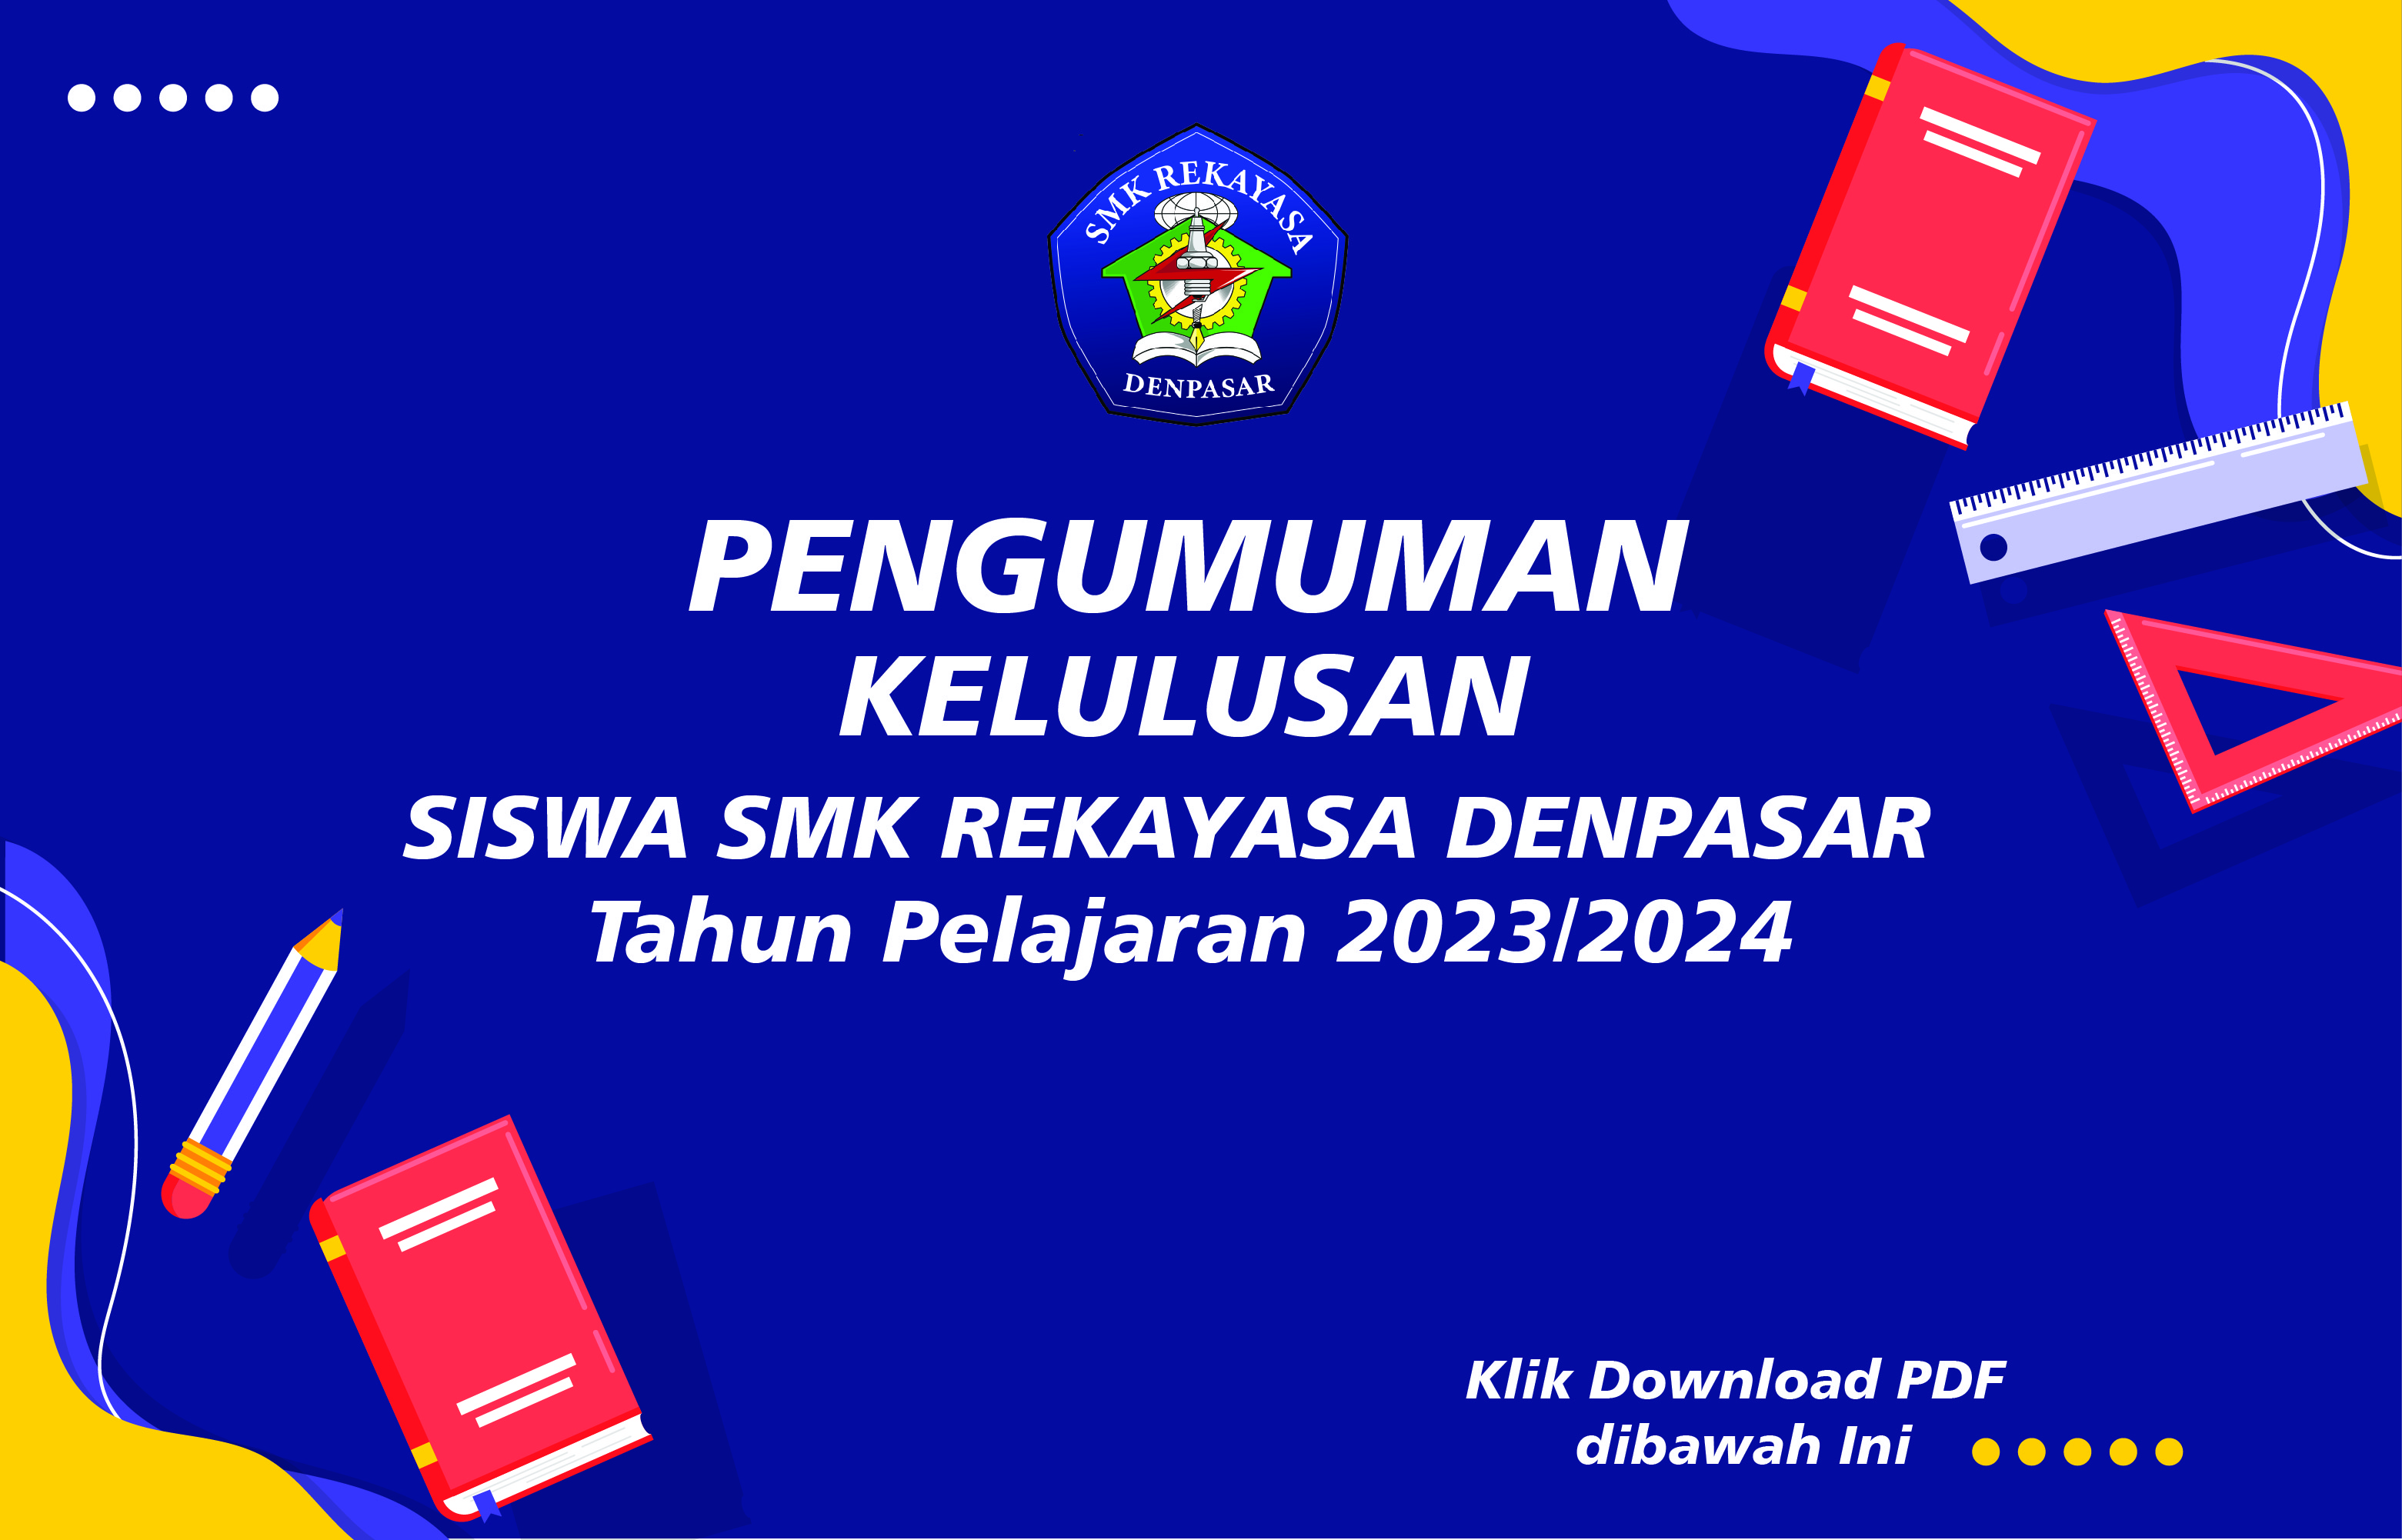 PENGUMUMAN KELULUSAN SISWA SMK RERKAYASA DENPASAR TAHUN PELAJARAN 2023/2024